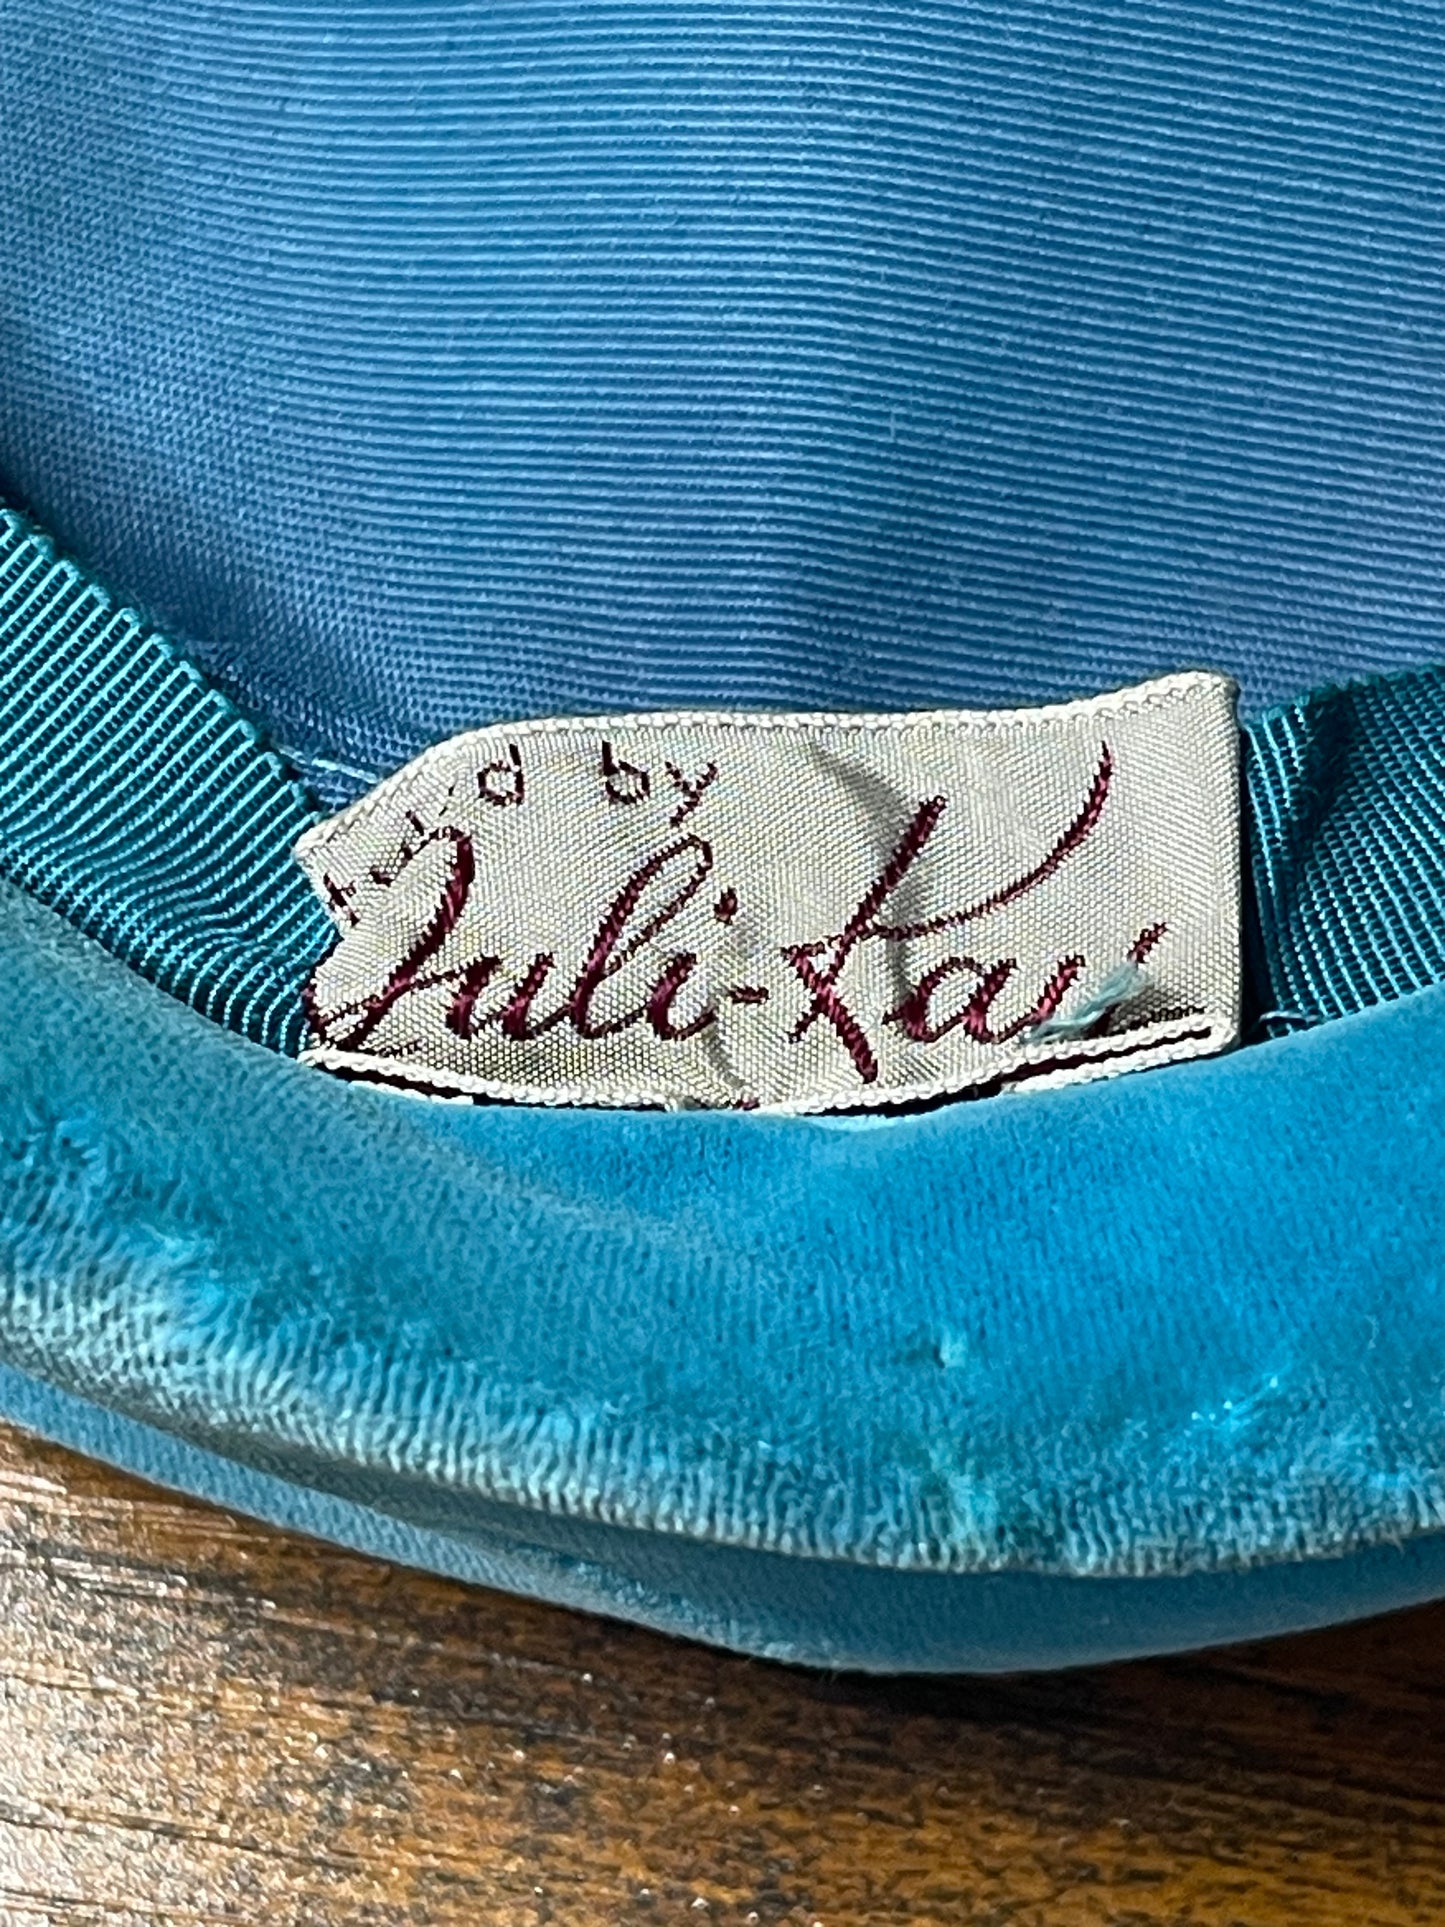 Teal Velvet Pillbox Hat with Rhinestone Accents